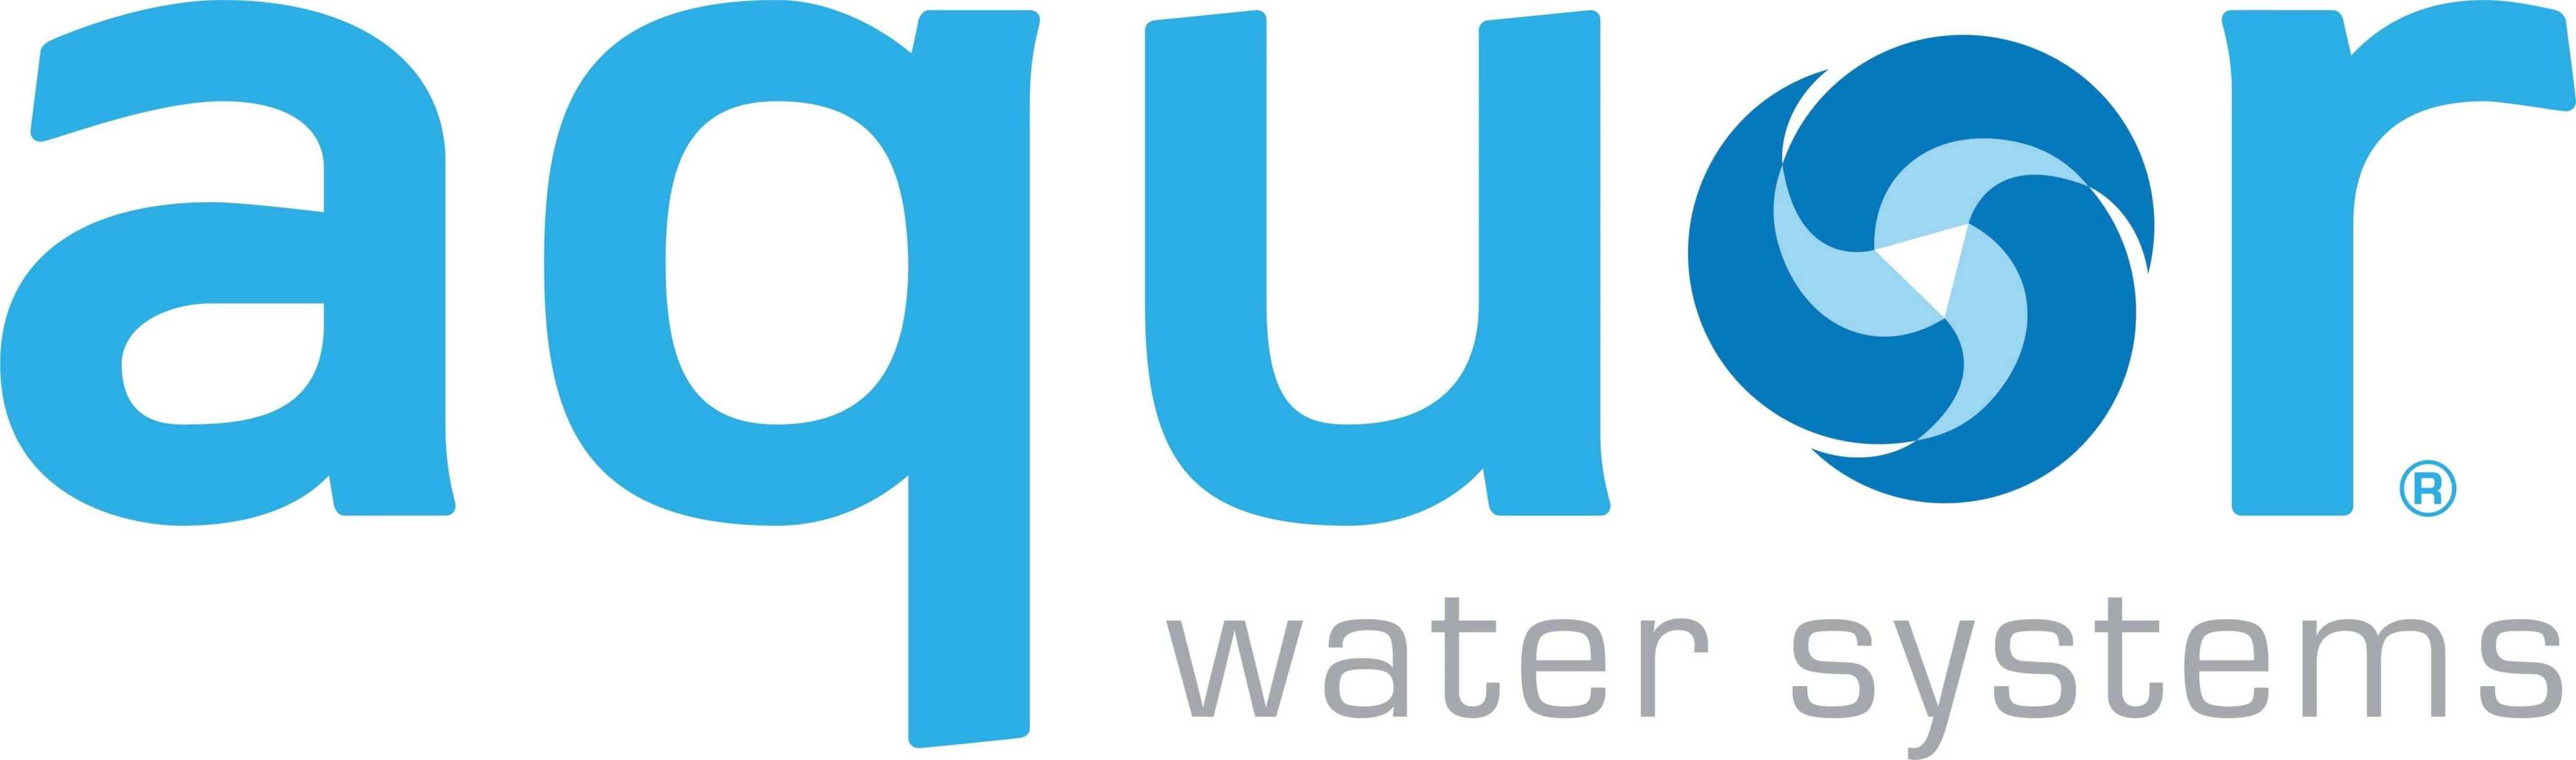 Aqua water system